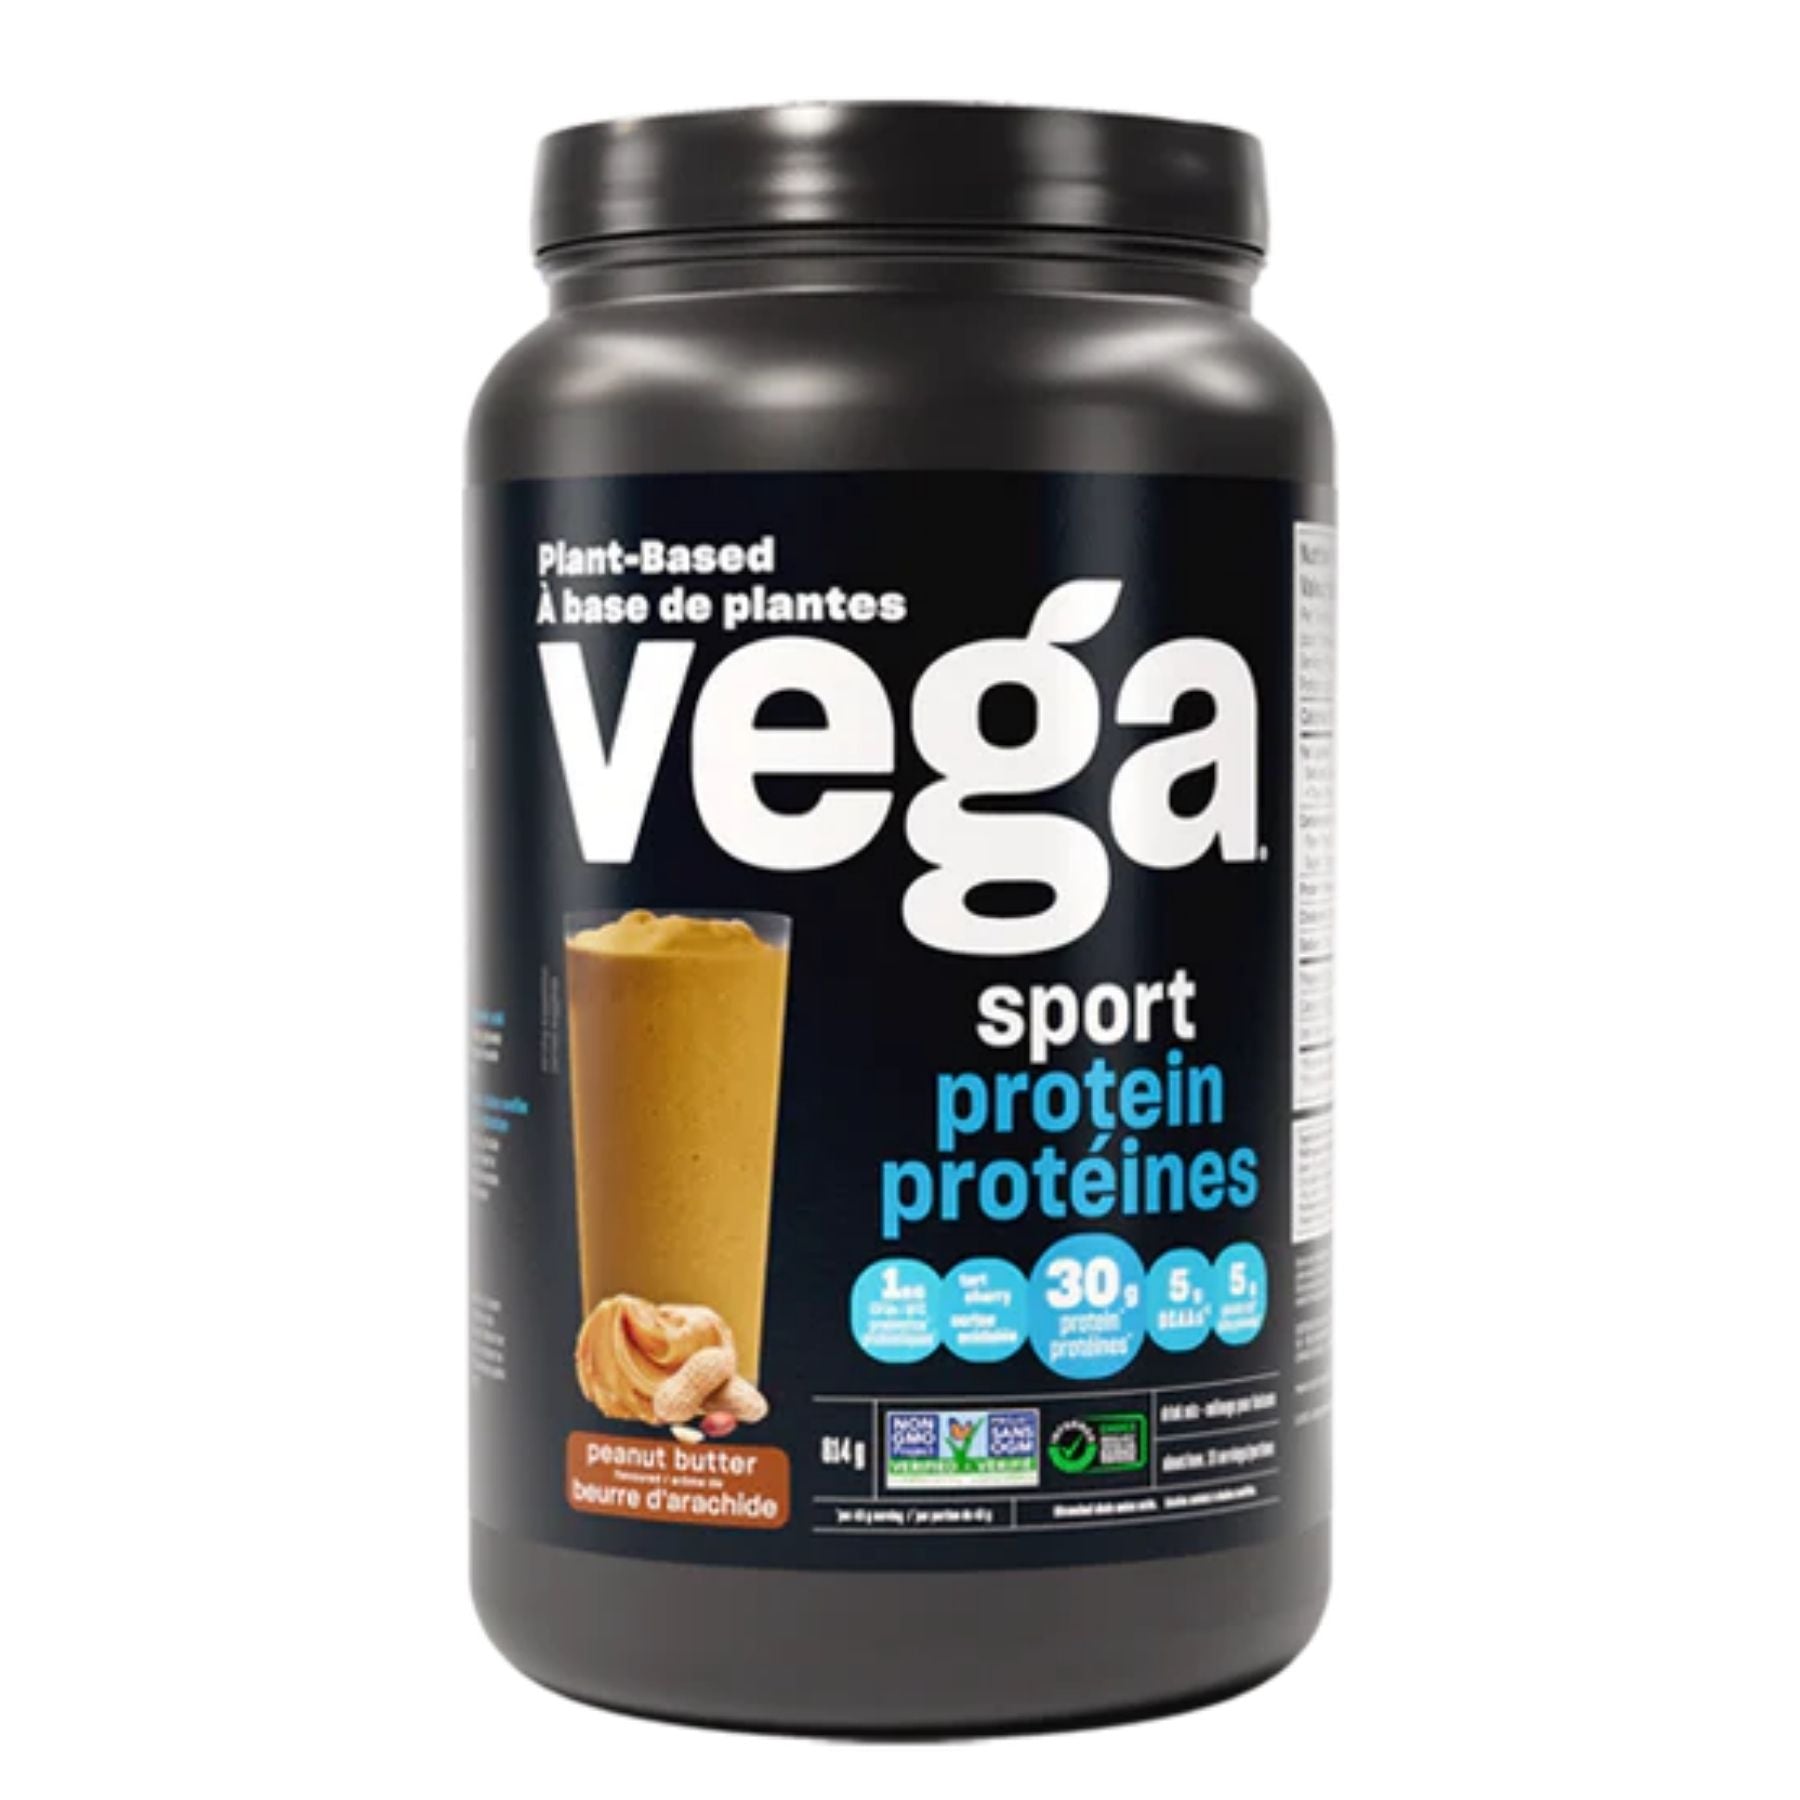 Vega Sport® Plant-Based Protein Powder - Peanut Butter 814g